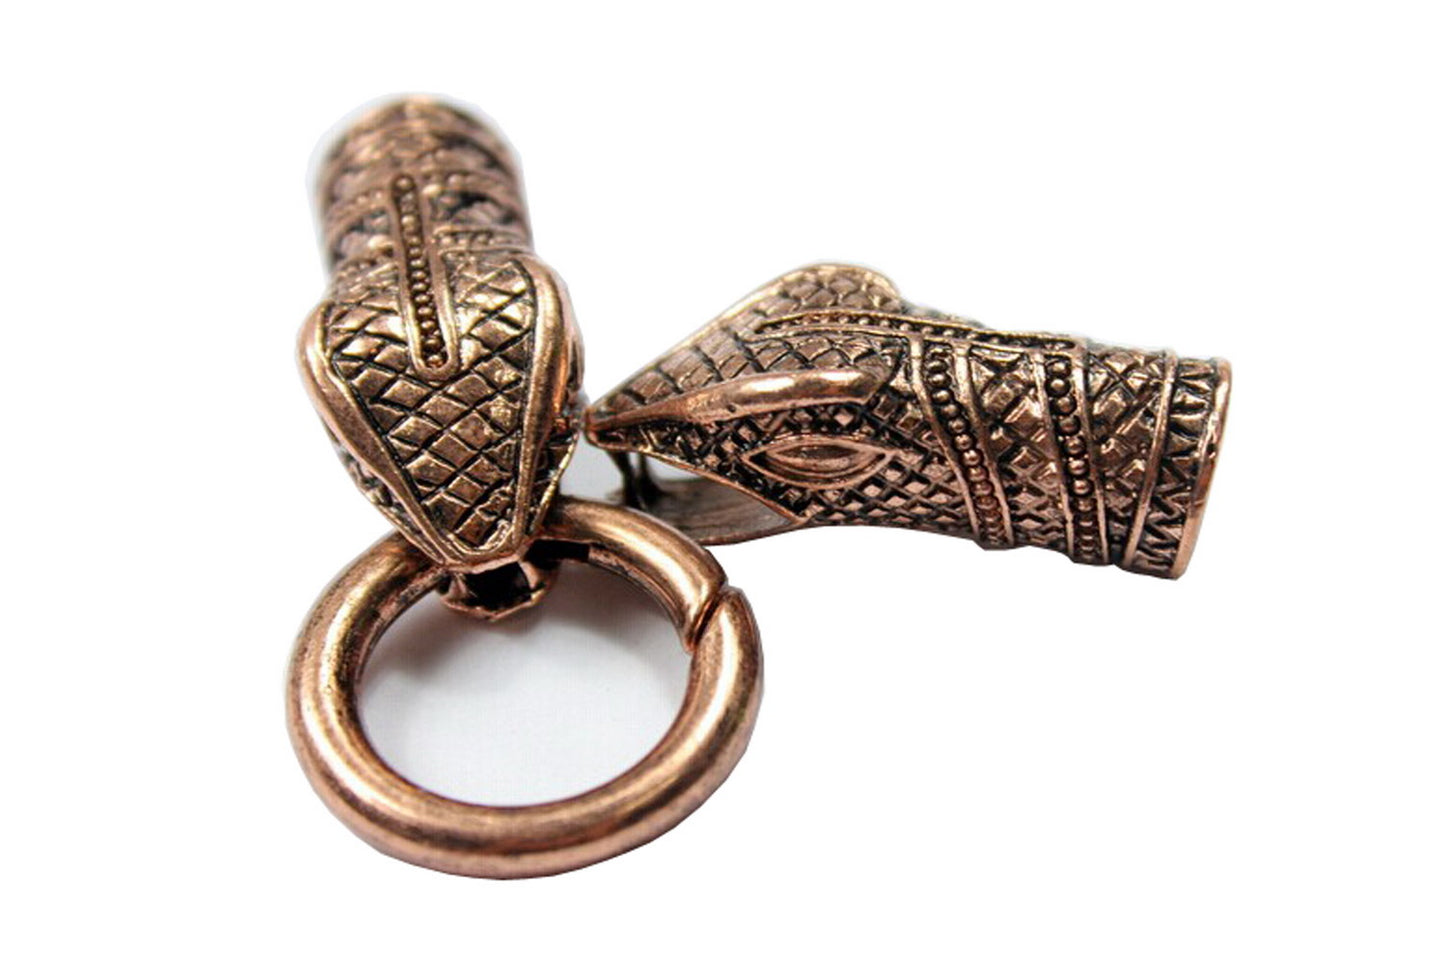 snake bracelet clasps closure charm hook 10mm round hole antique copper